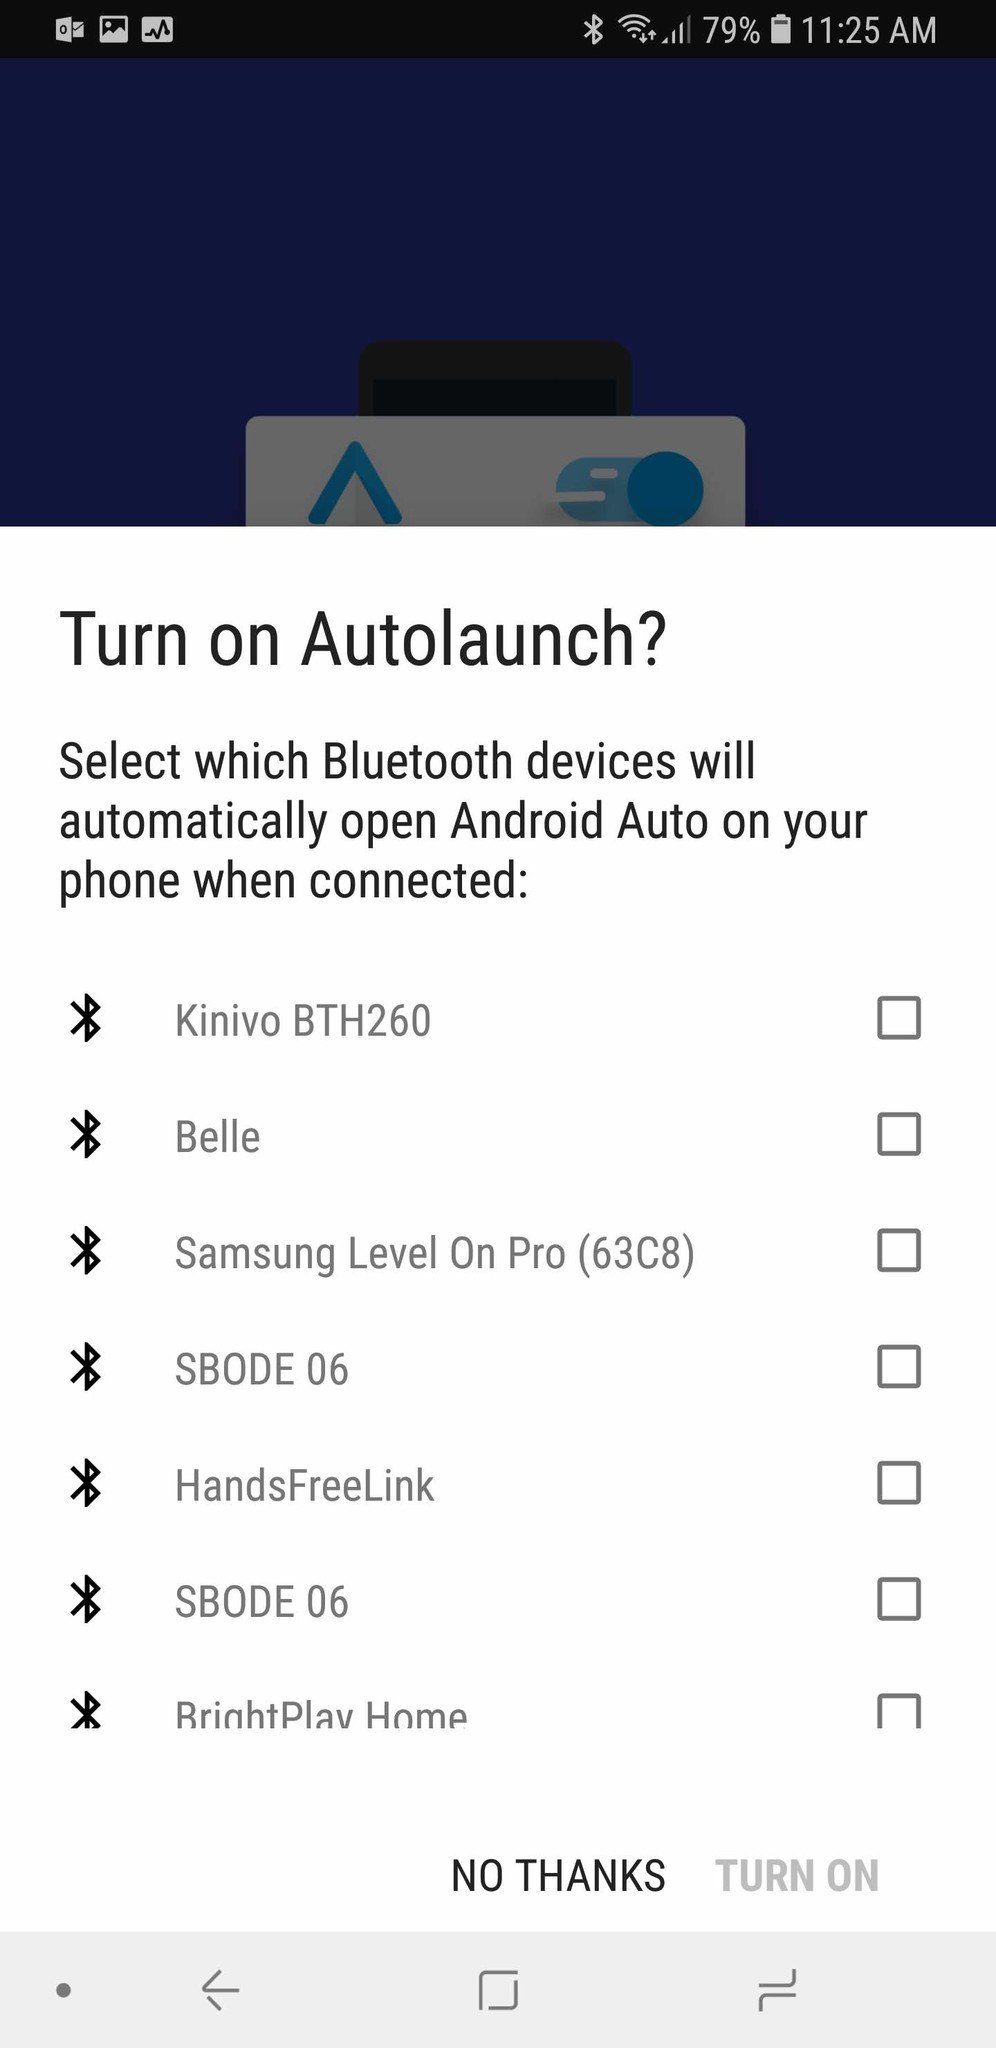 android-autolaunch-8.jpg?itok=hUg60Bmt